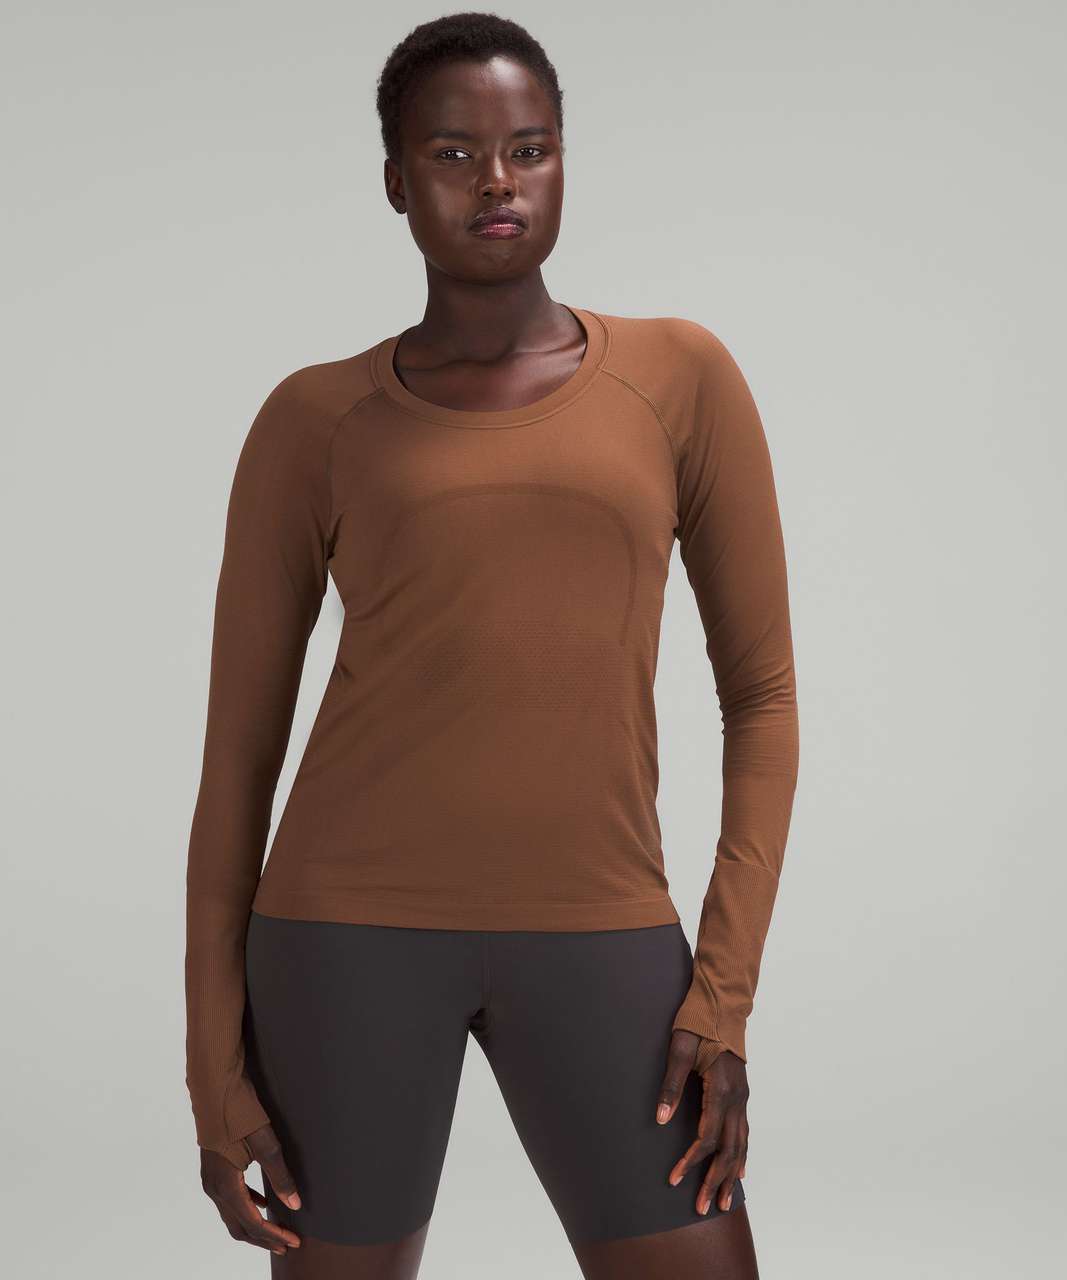 Lululemon Swiftly Tech Long-Sleeve Shirt 2.0 *Race Length - Roasted Brown / Roasted Brown